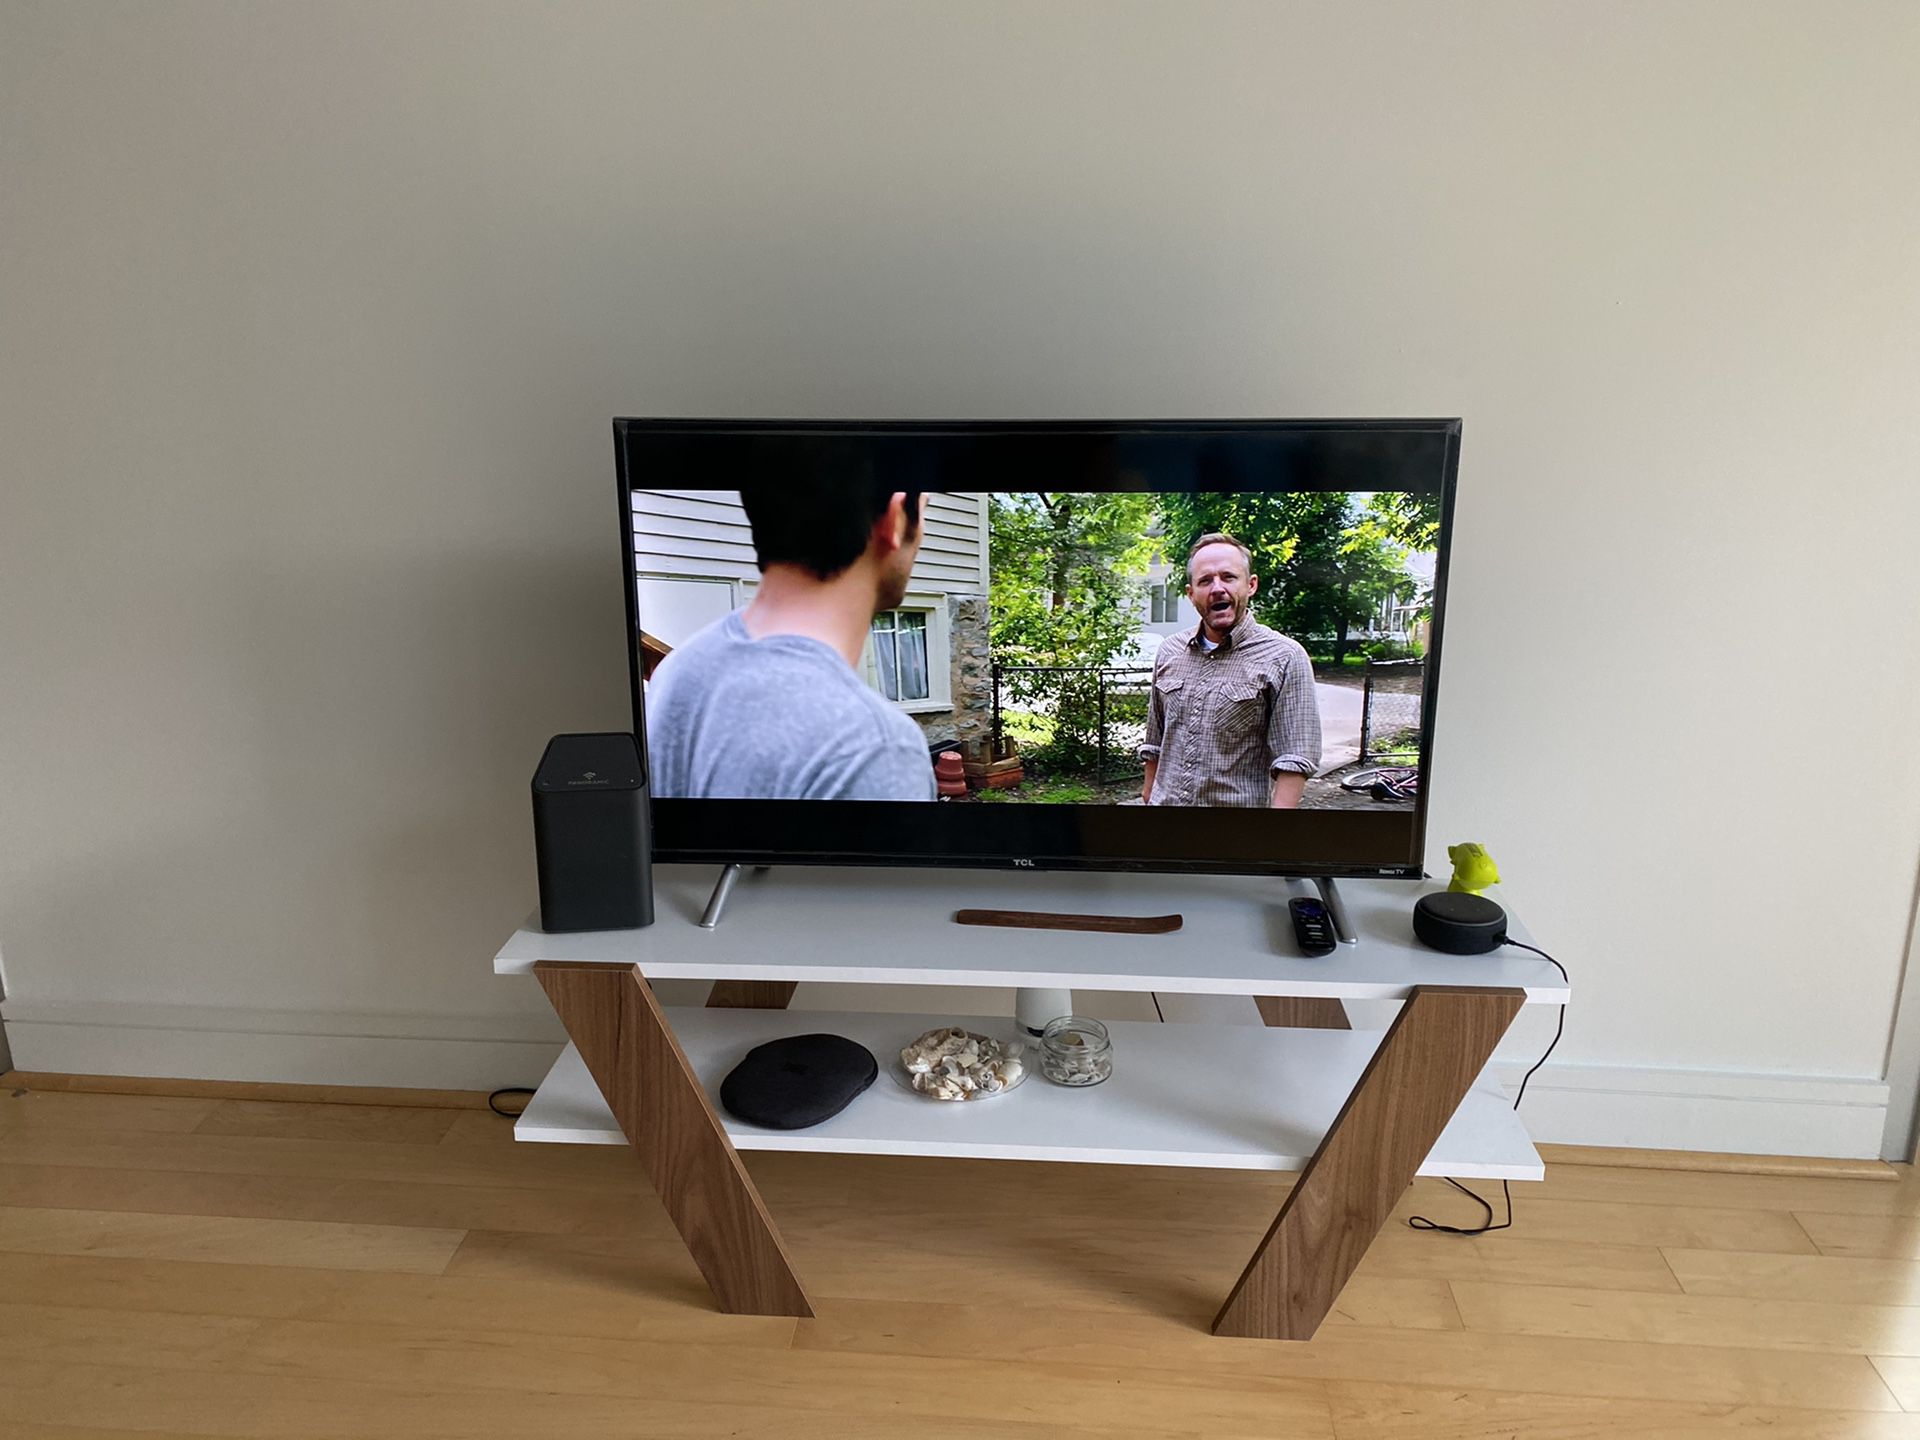 TCL 40” Smart TV